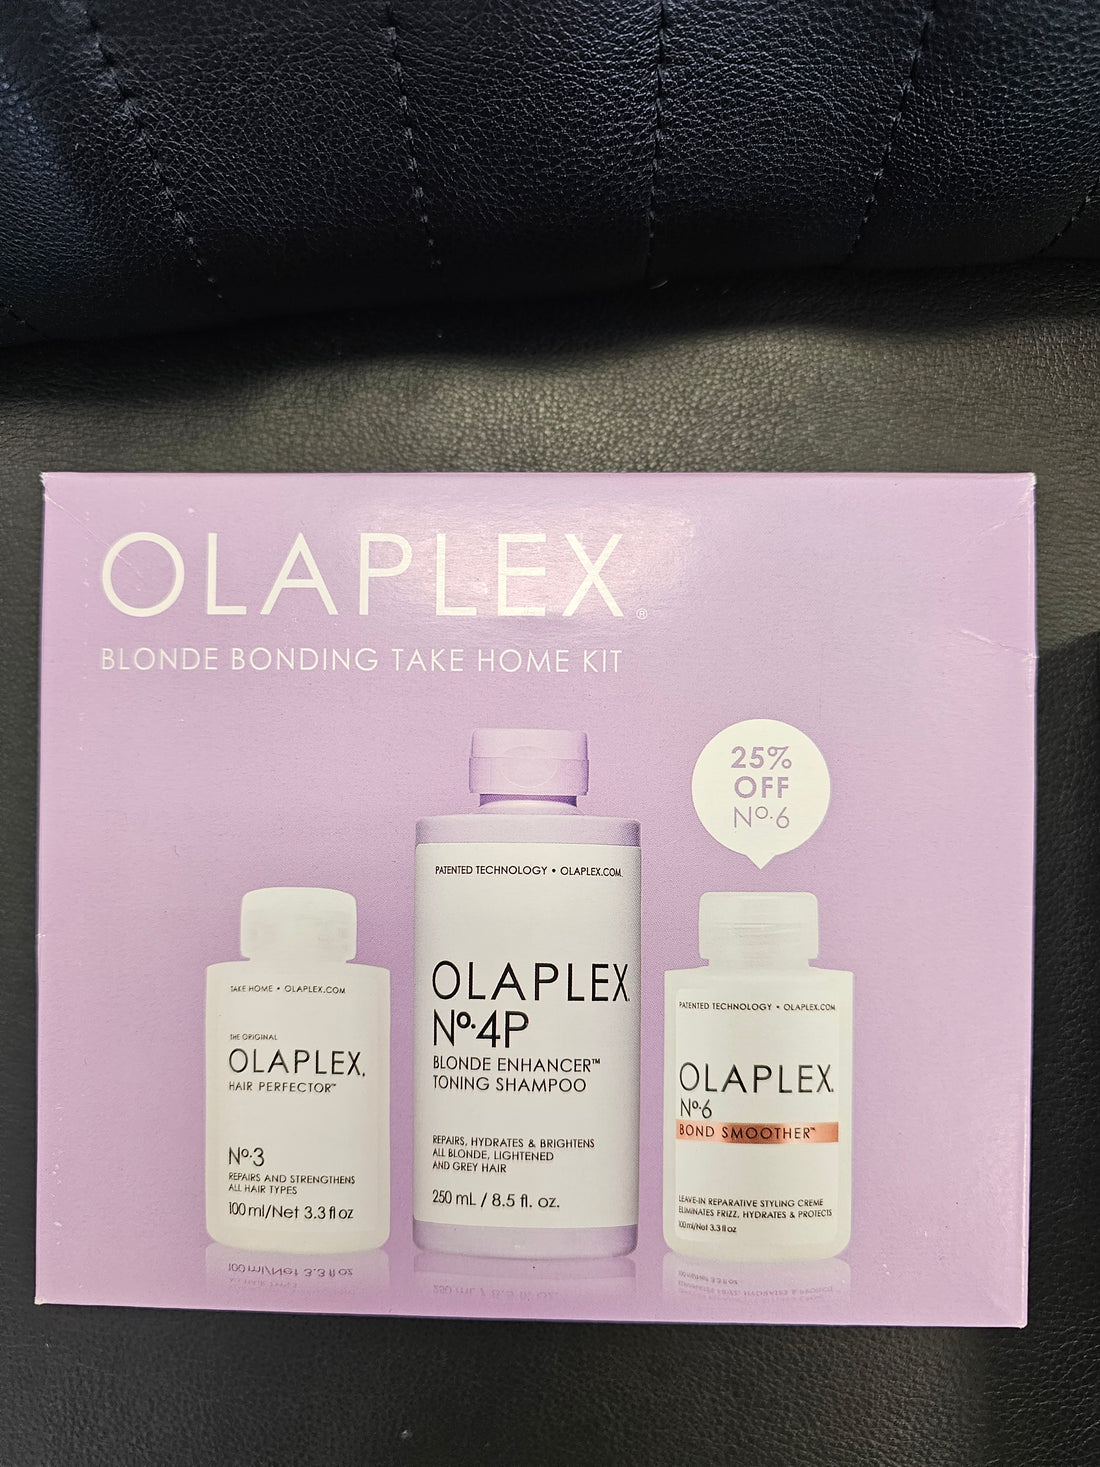 Olaplex Blonde Bonding take home kit